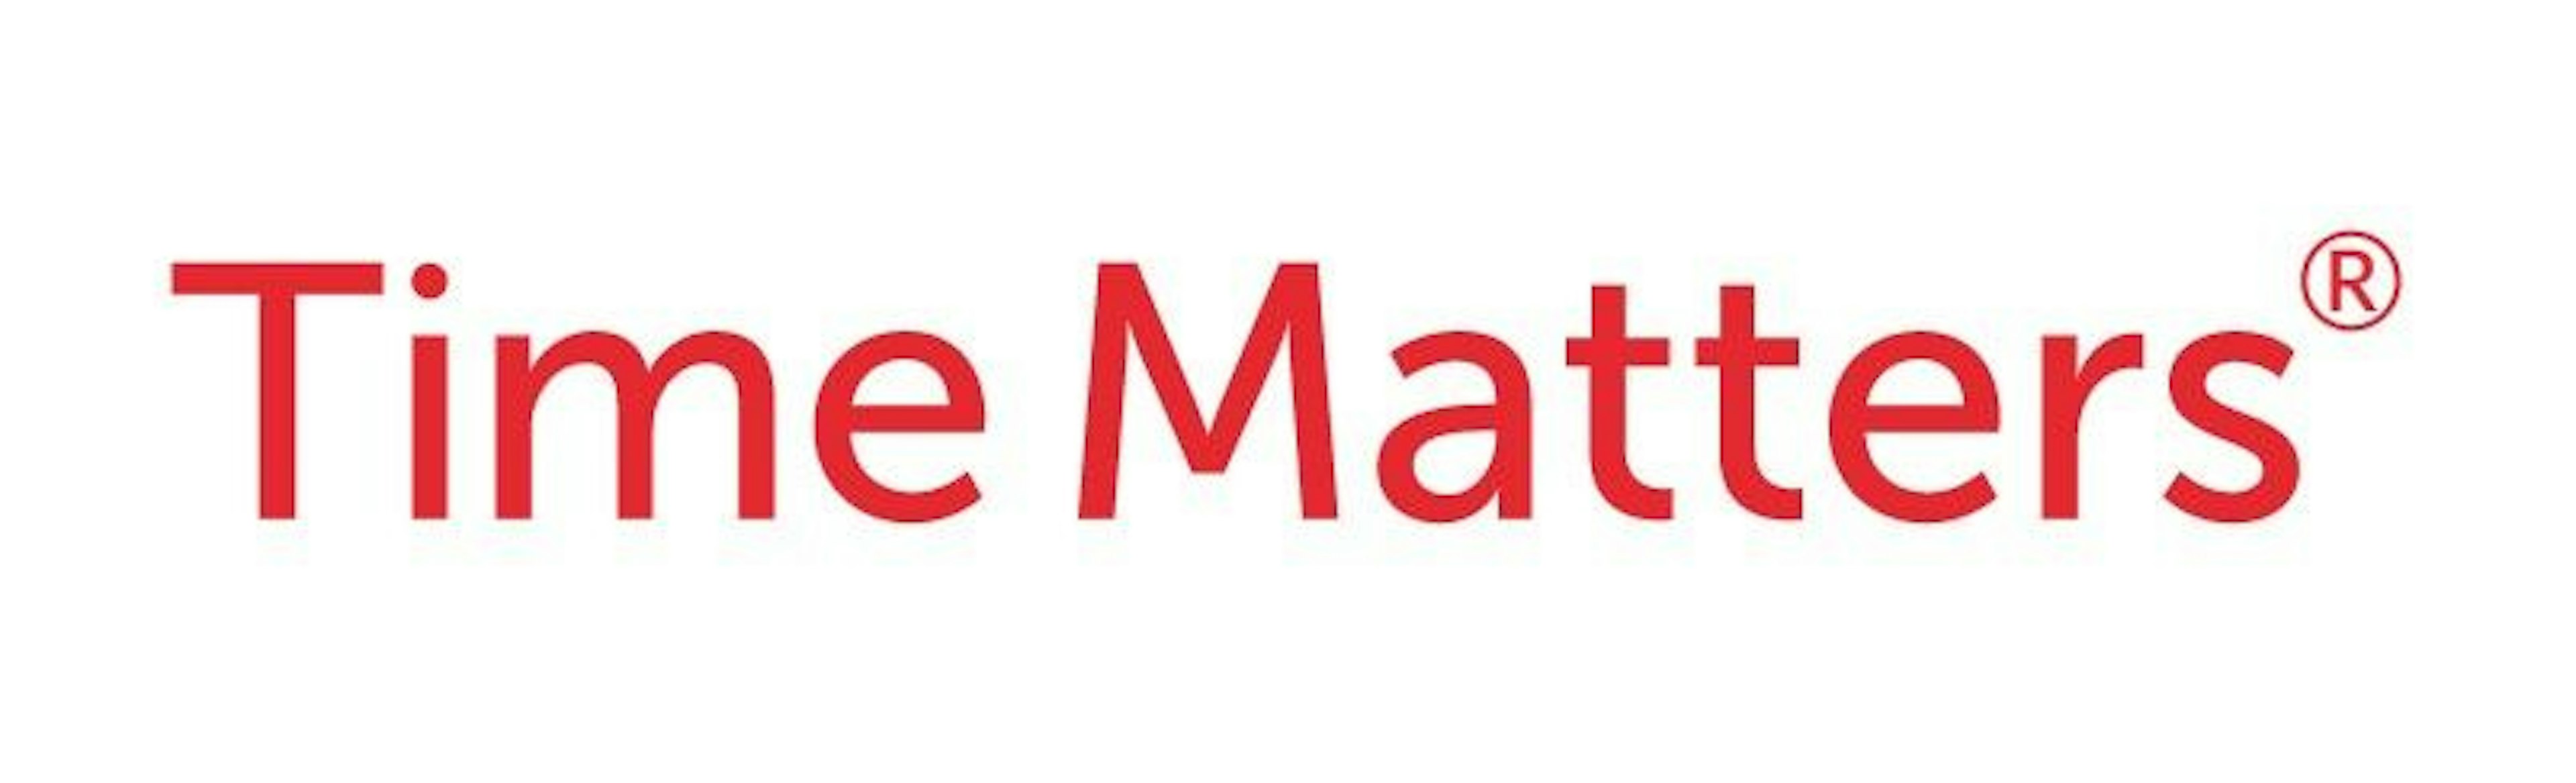 Time Matters Logo